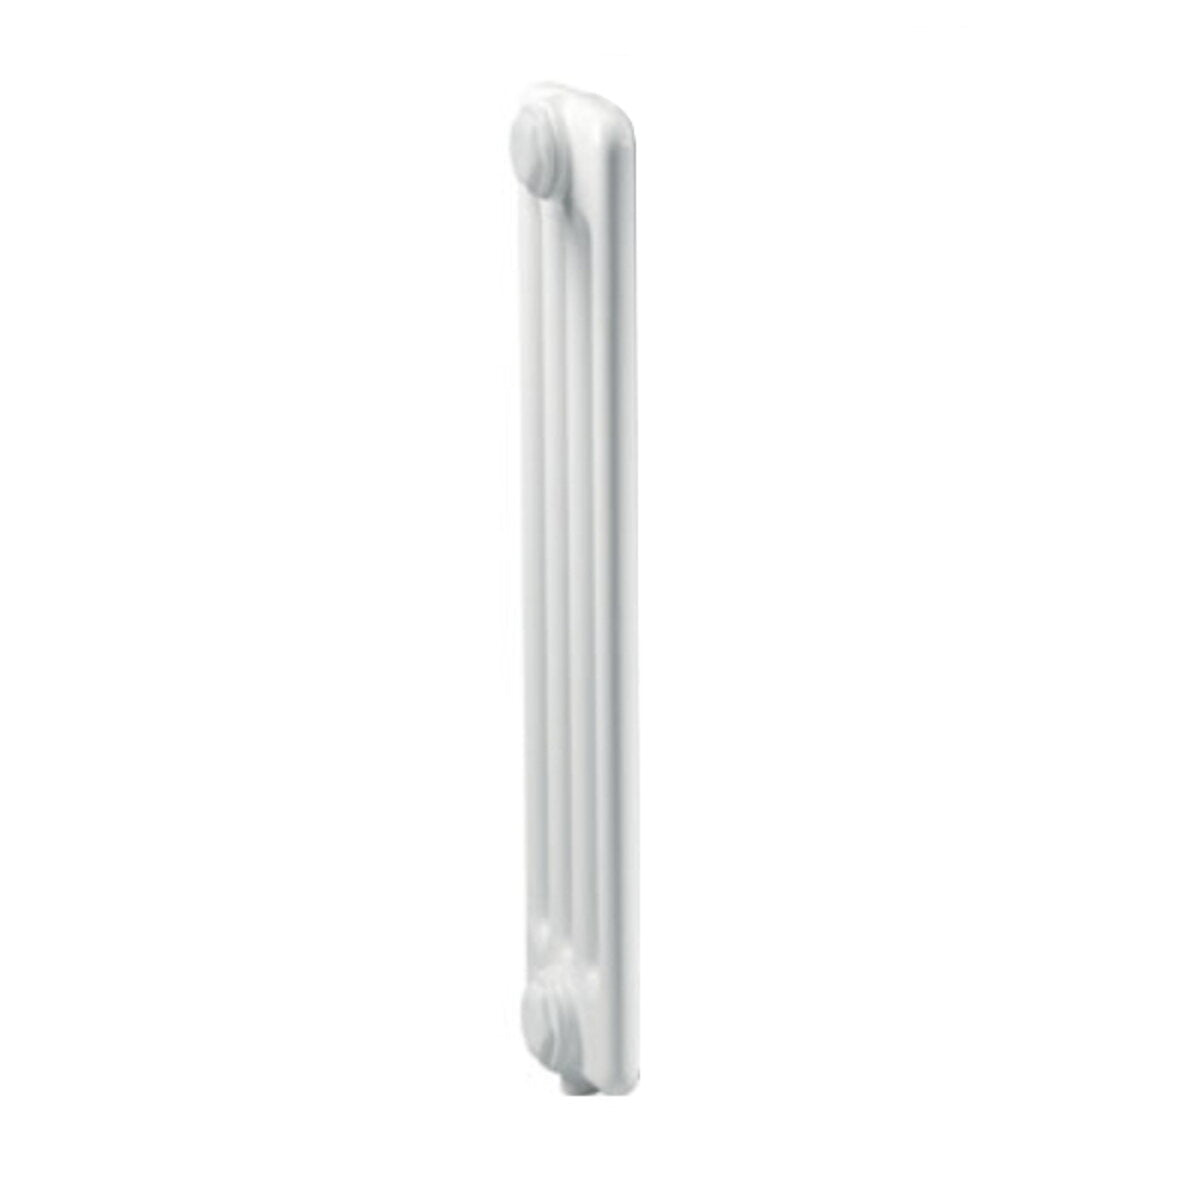 Ercos Comby steel column radiator single element 3 columns center distance 800 mm